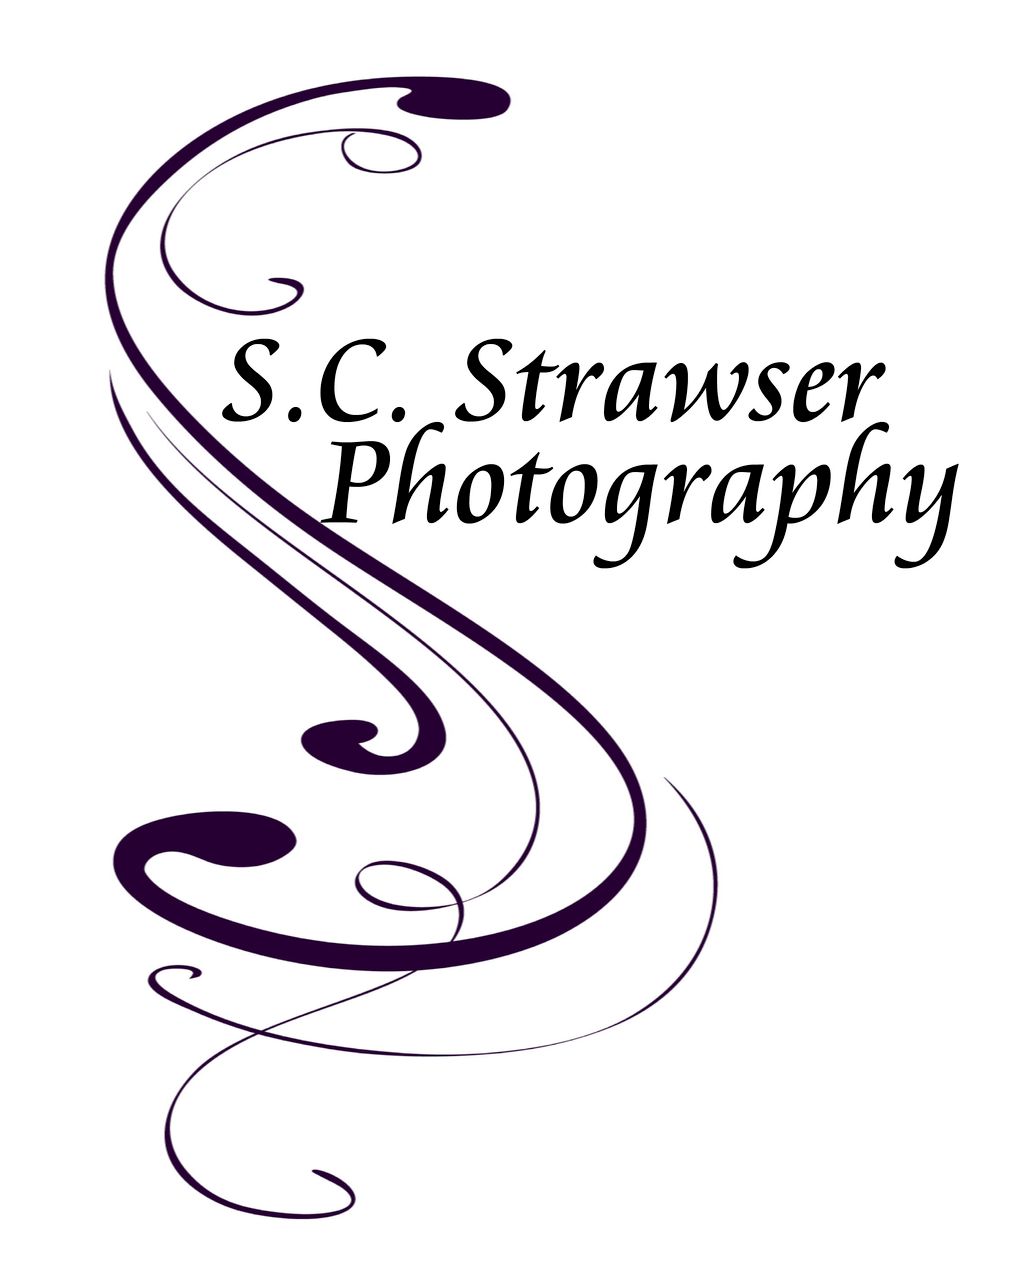 S.C. Strawser Photography